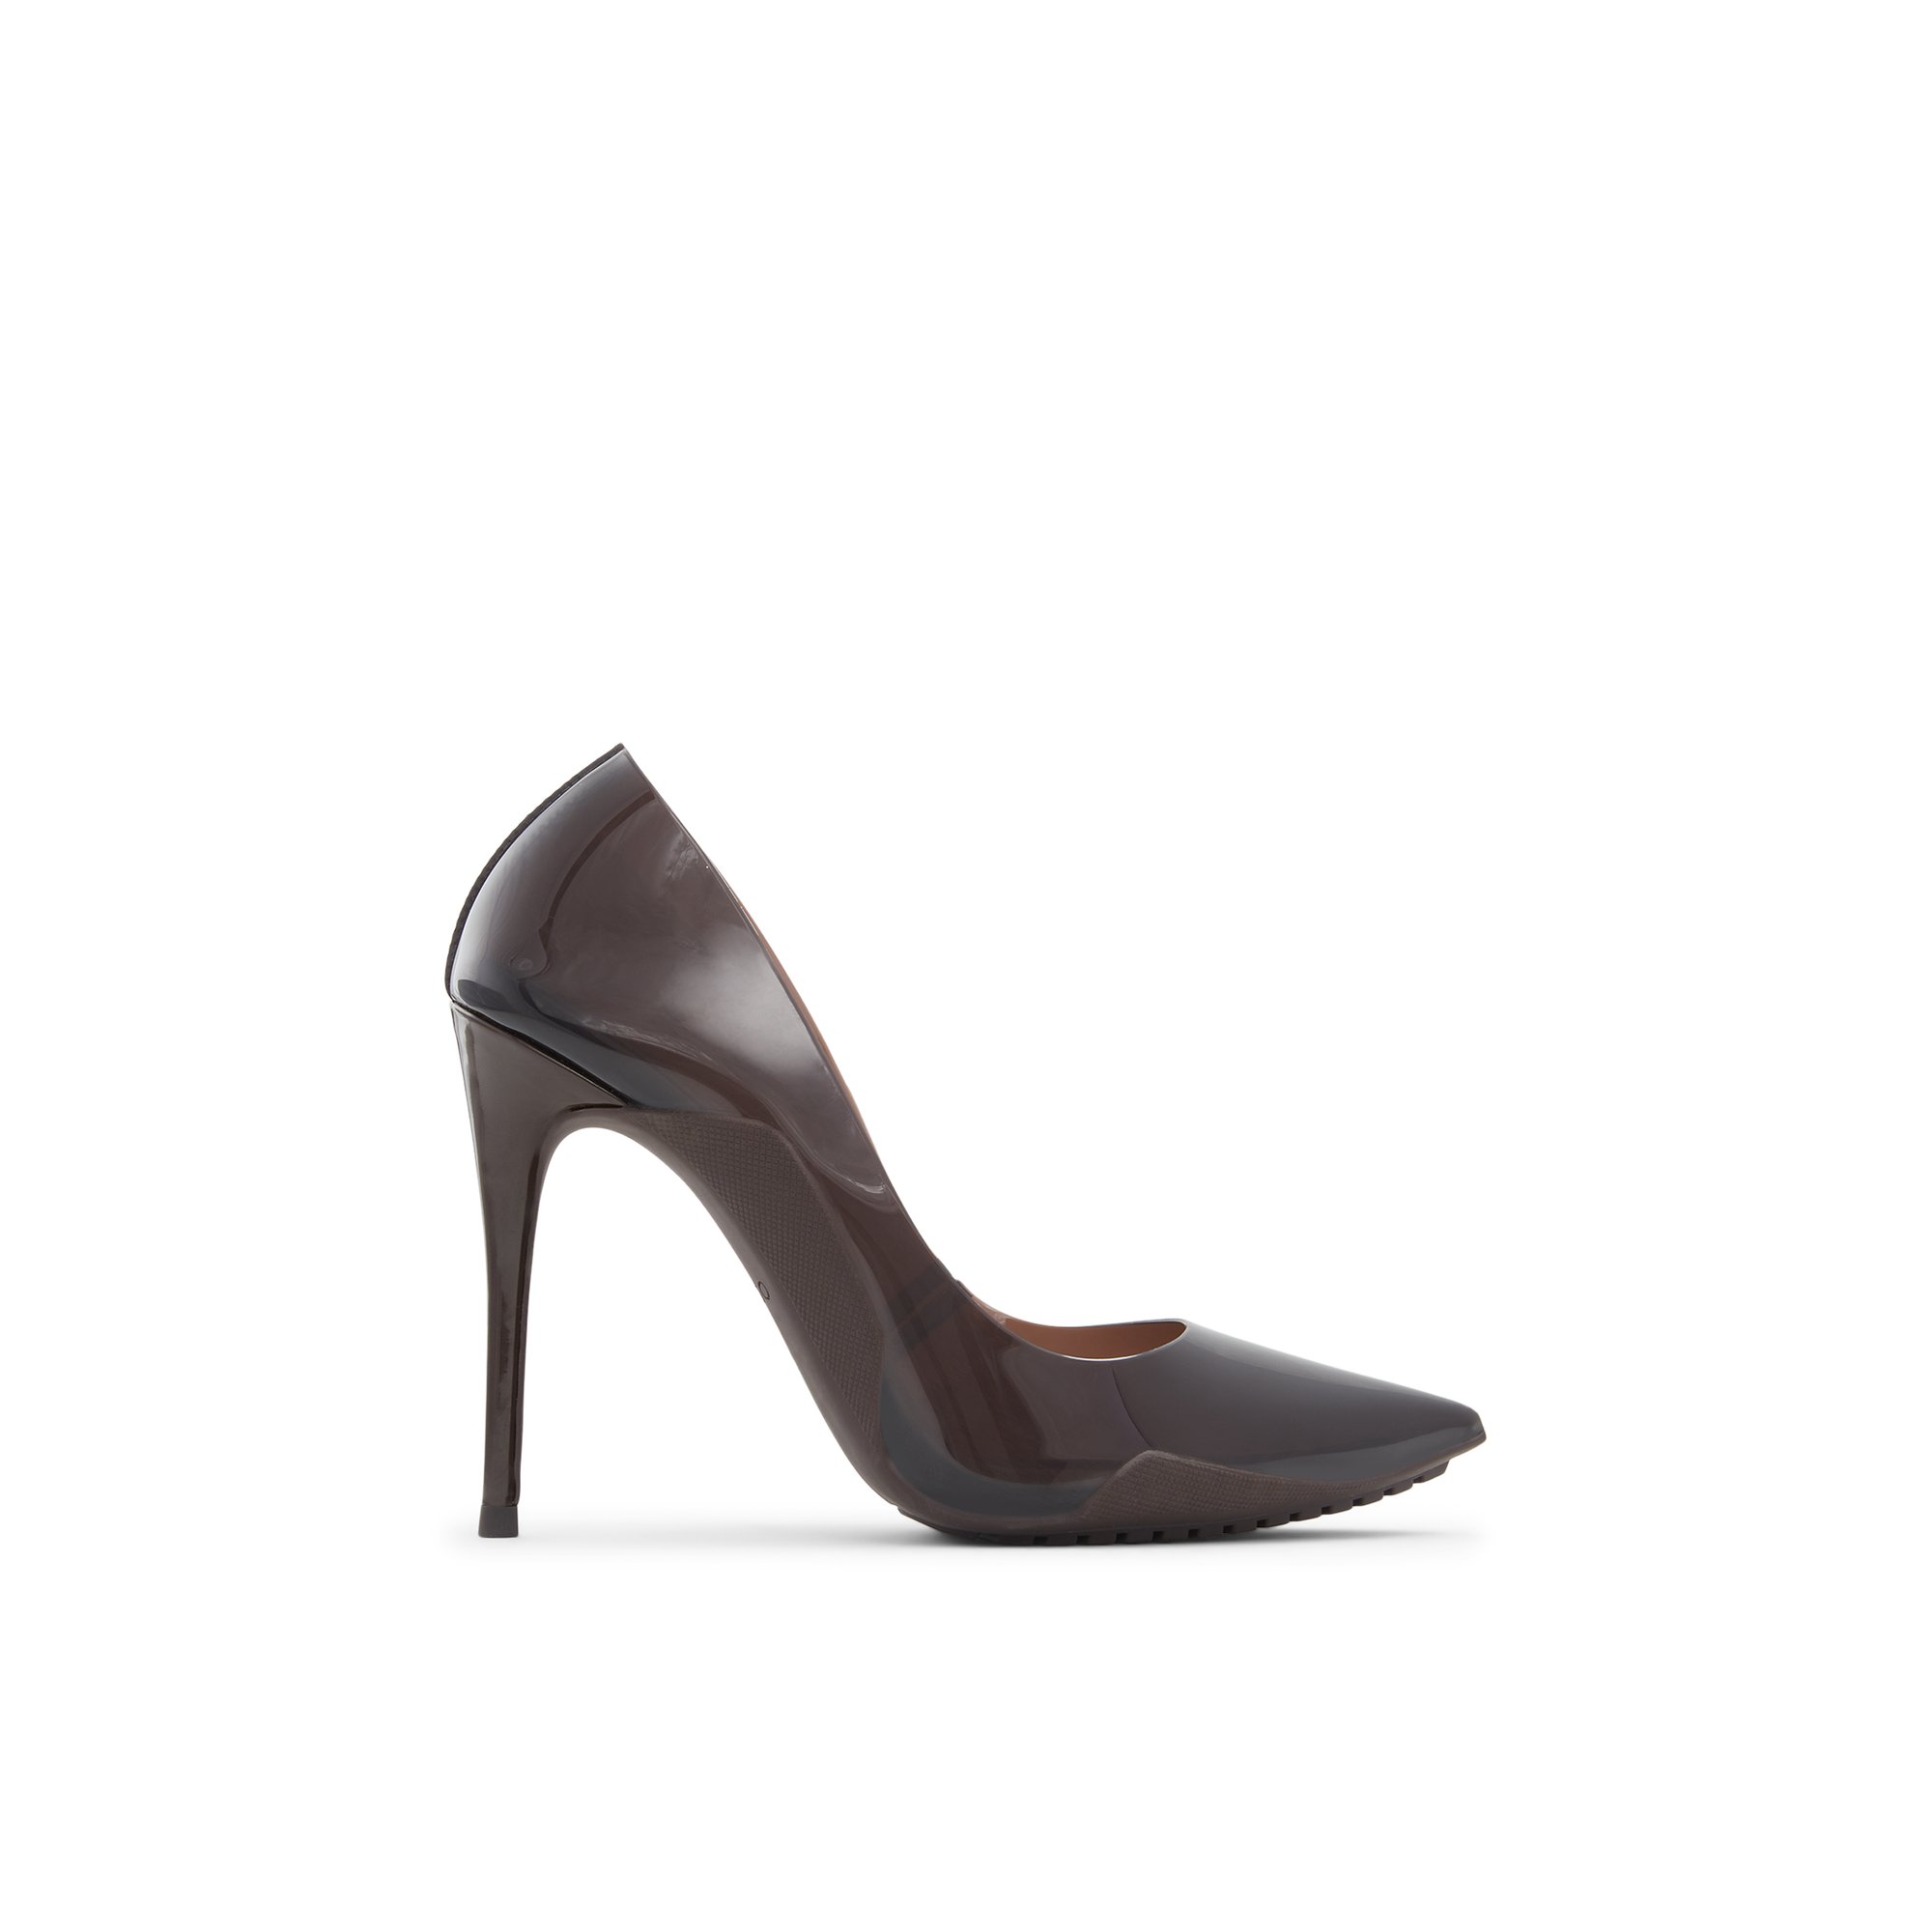 Image of ALDO Sculptclear - Women's Pump Heel - Brown, Size 6.5